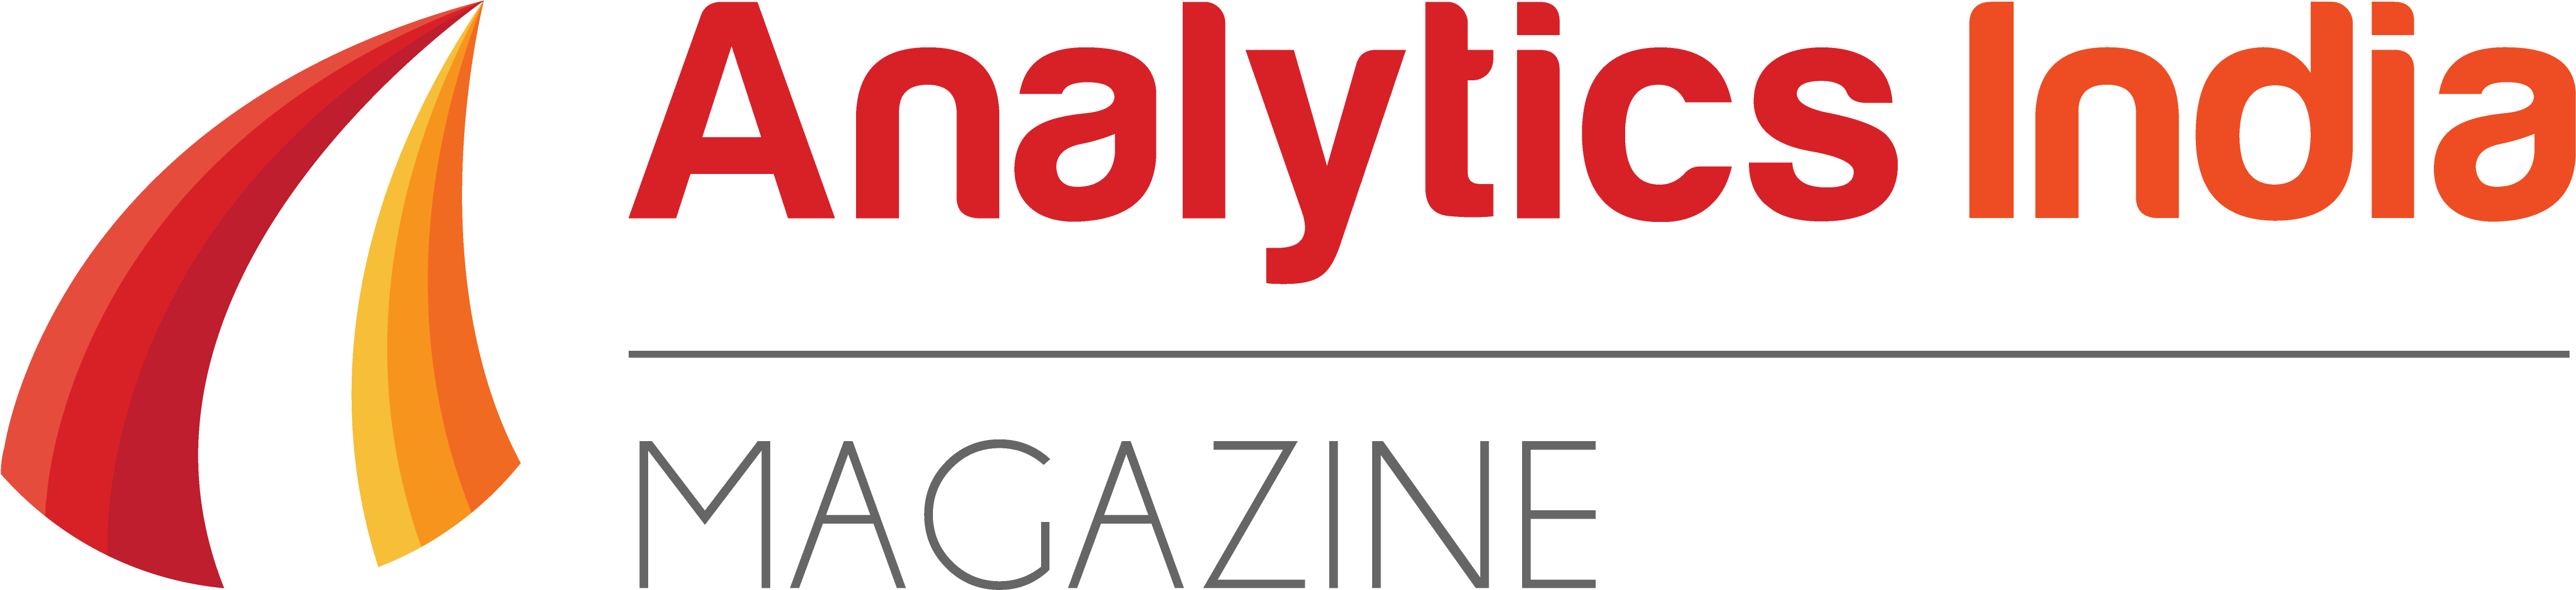 Analytics India Magazine - Analytics India Mag Logo Clipart (4876x1284), Png Download